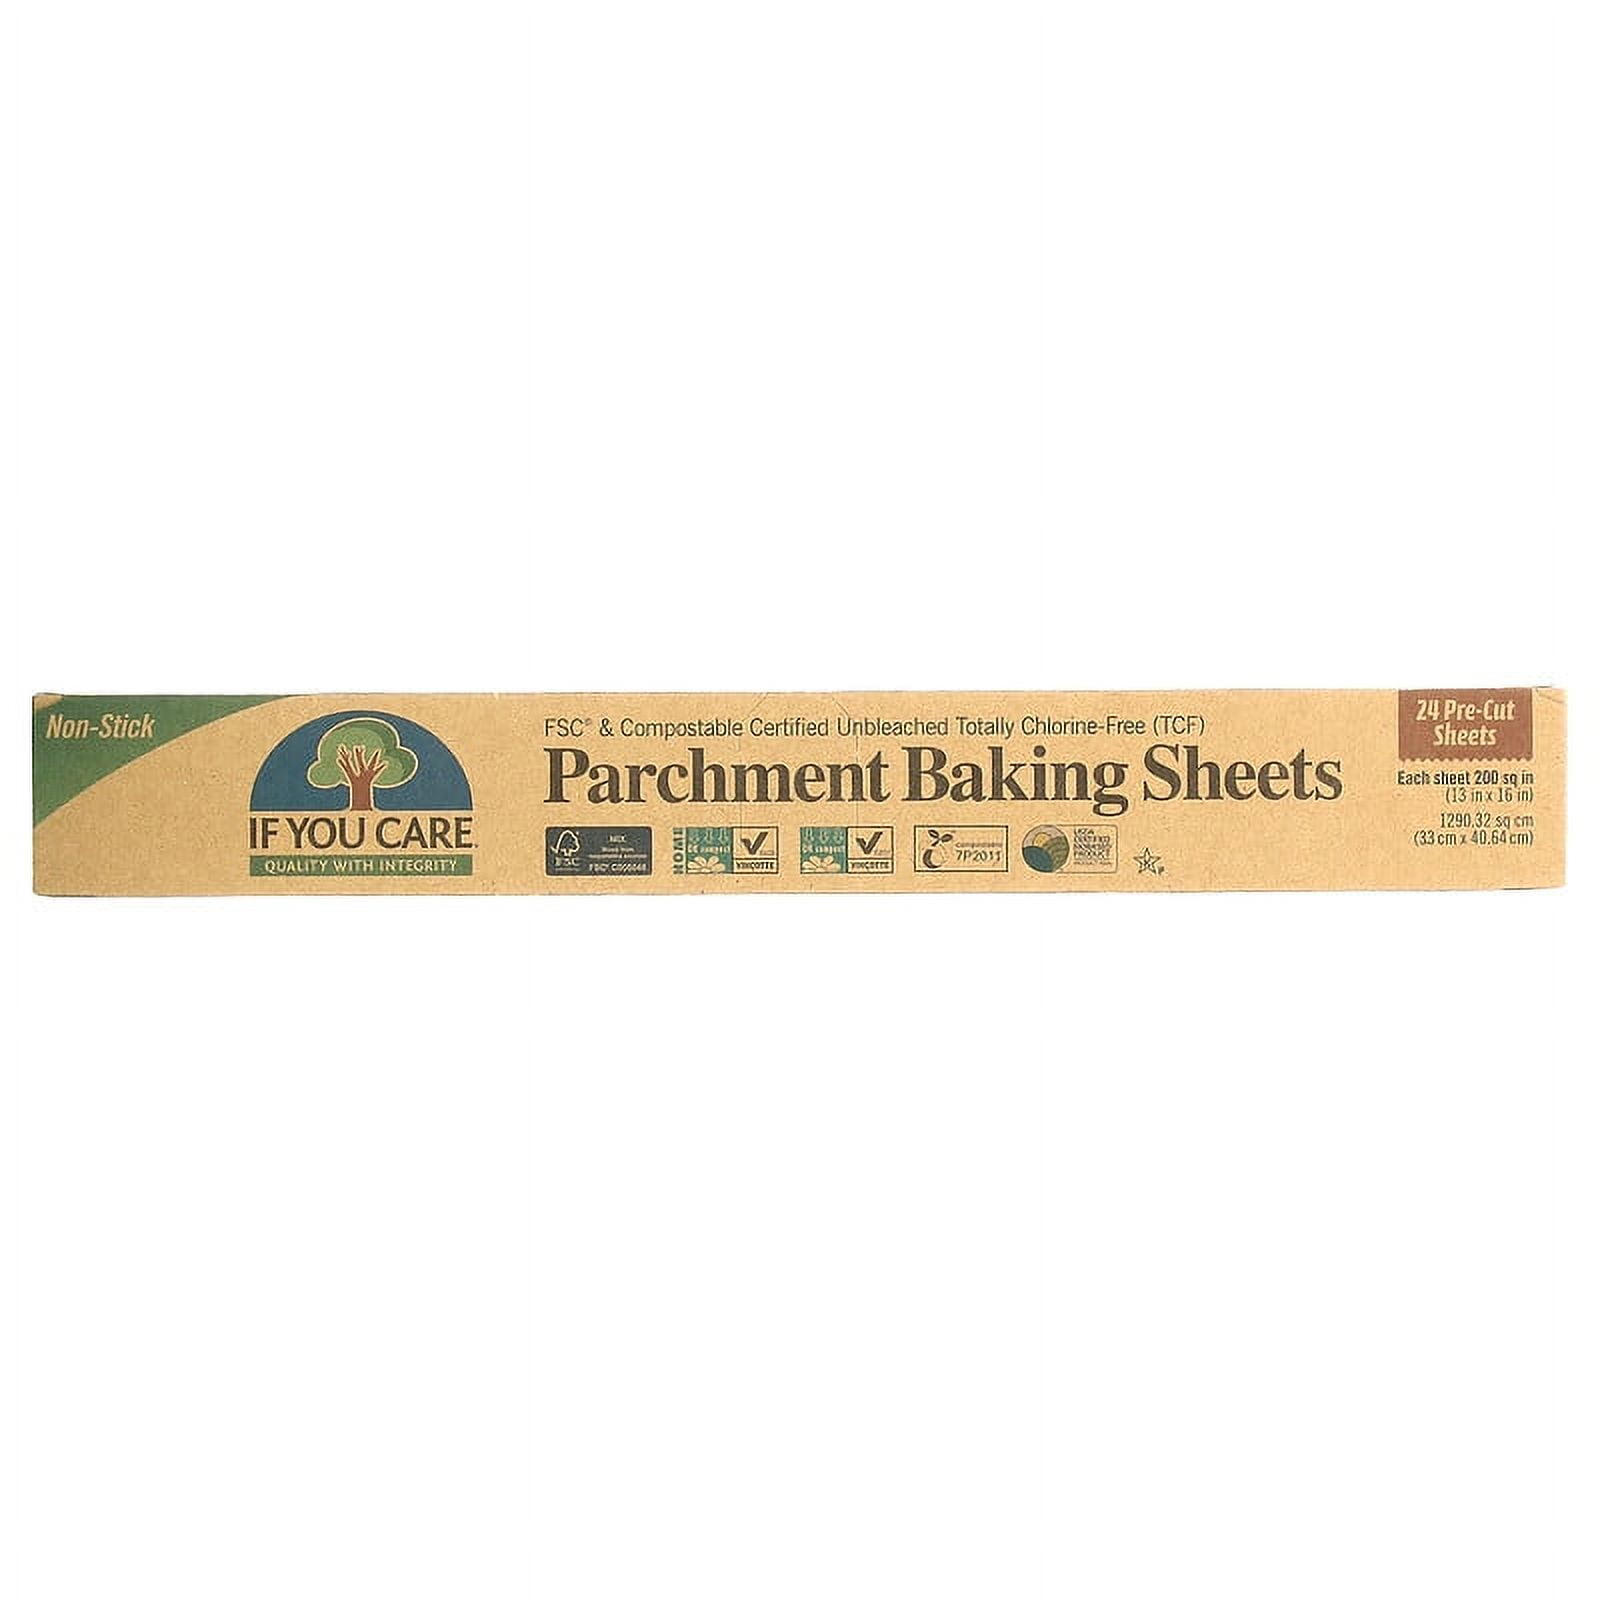 Parchment Paper Pre Cut Sheets 13 X 16.5 - Roll of 30